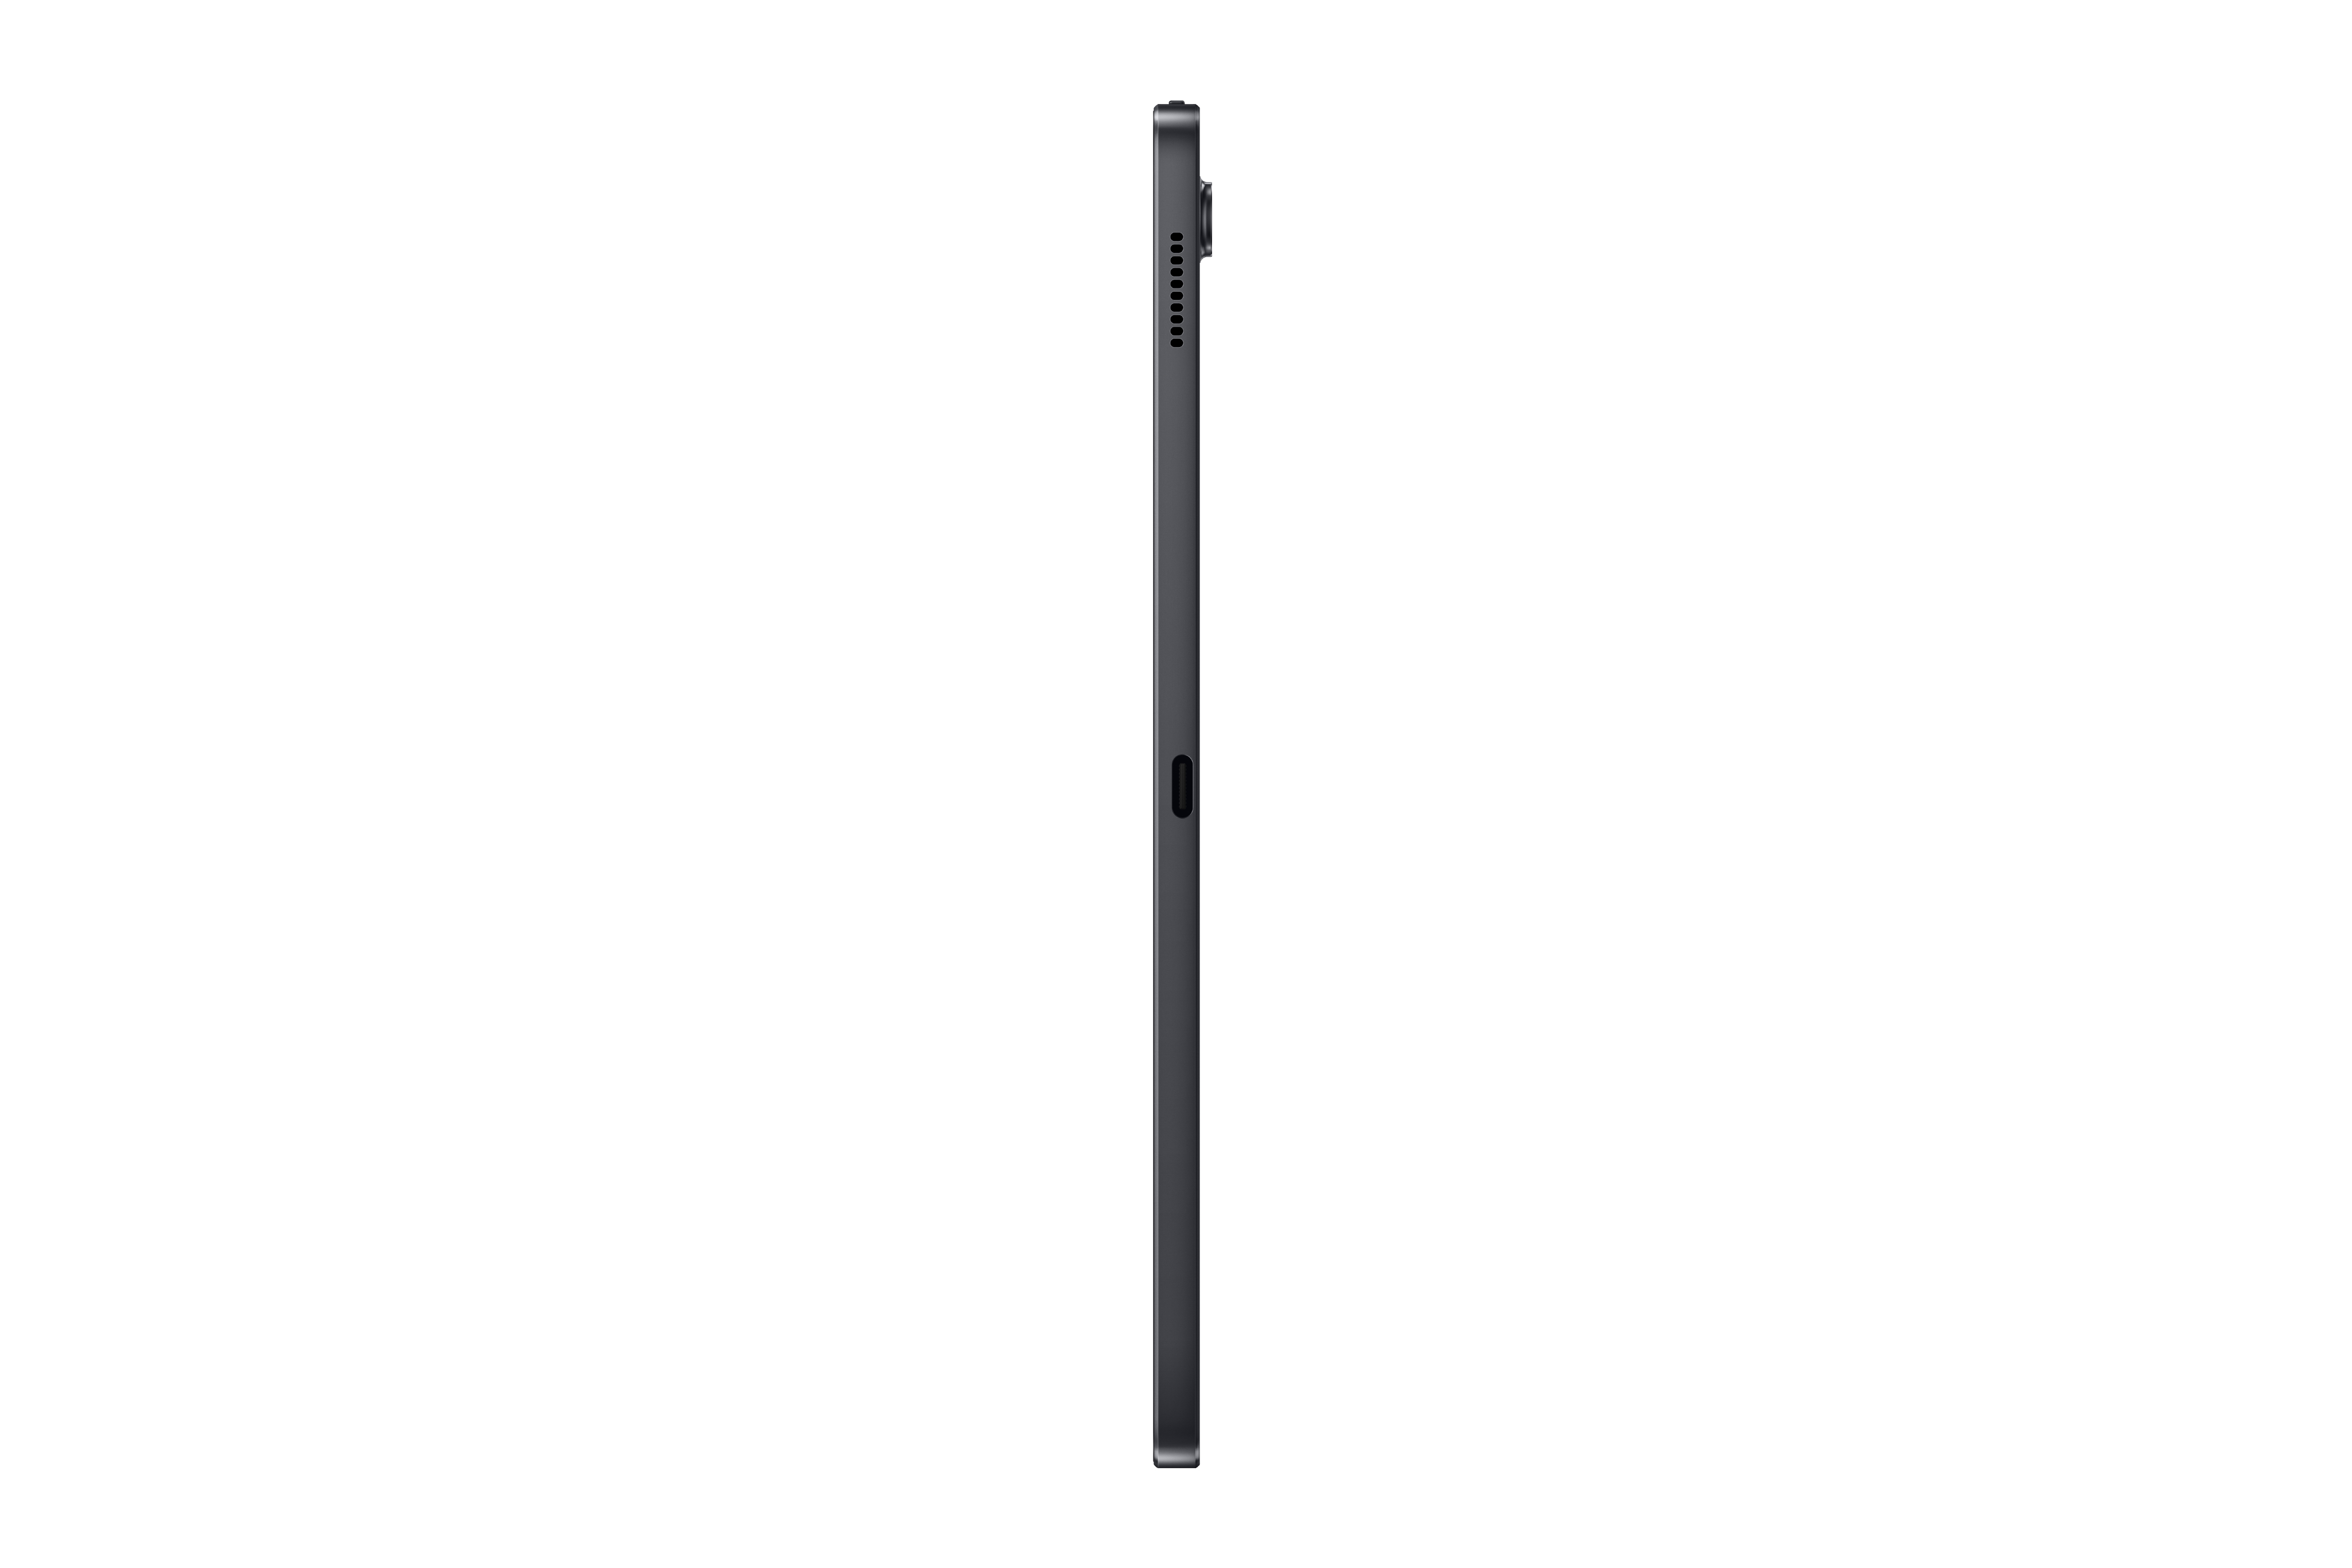 Thumbnail image of Galaxy Tab S7 FE 5G, 64GB, Mystic Black (US Cellular)